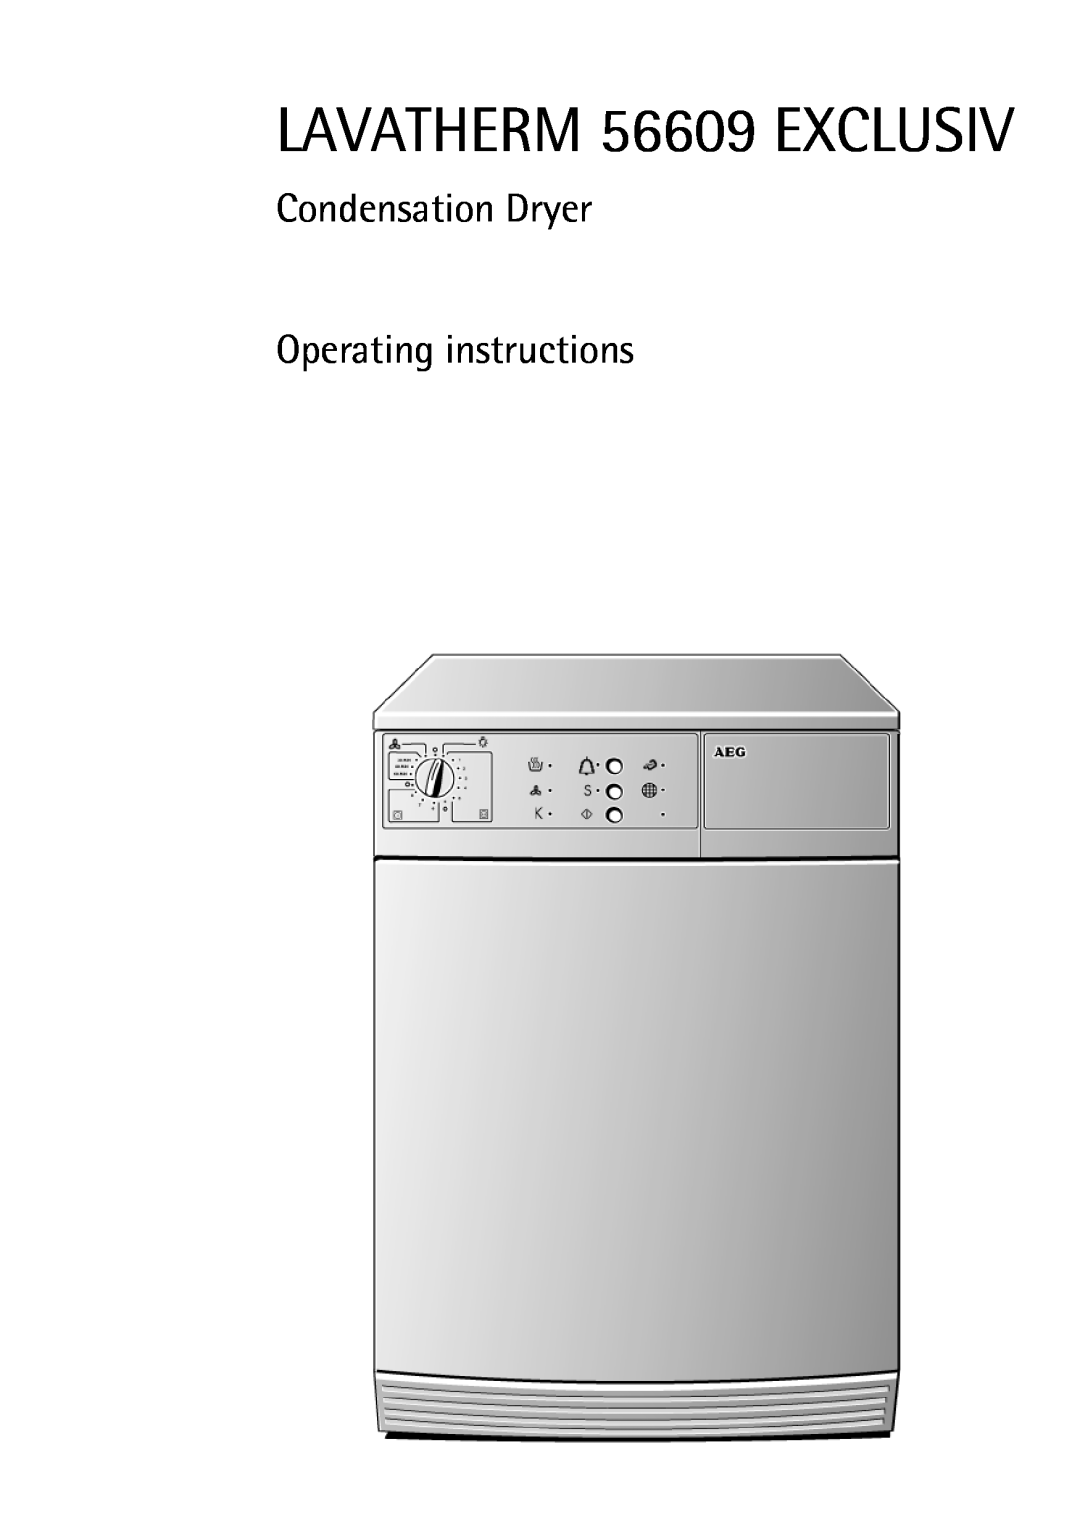 AEG operating instructions LAVATHERM 56609 EXCLUSIV, Condensation Dryer Operating instructions 